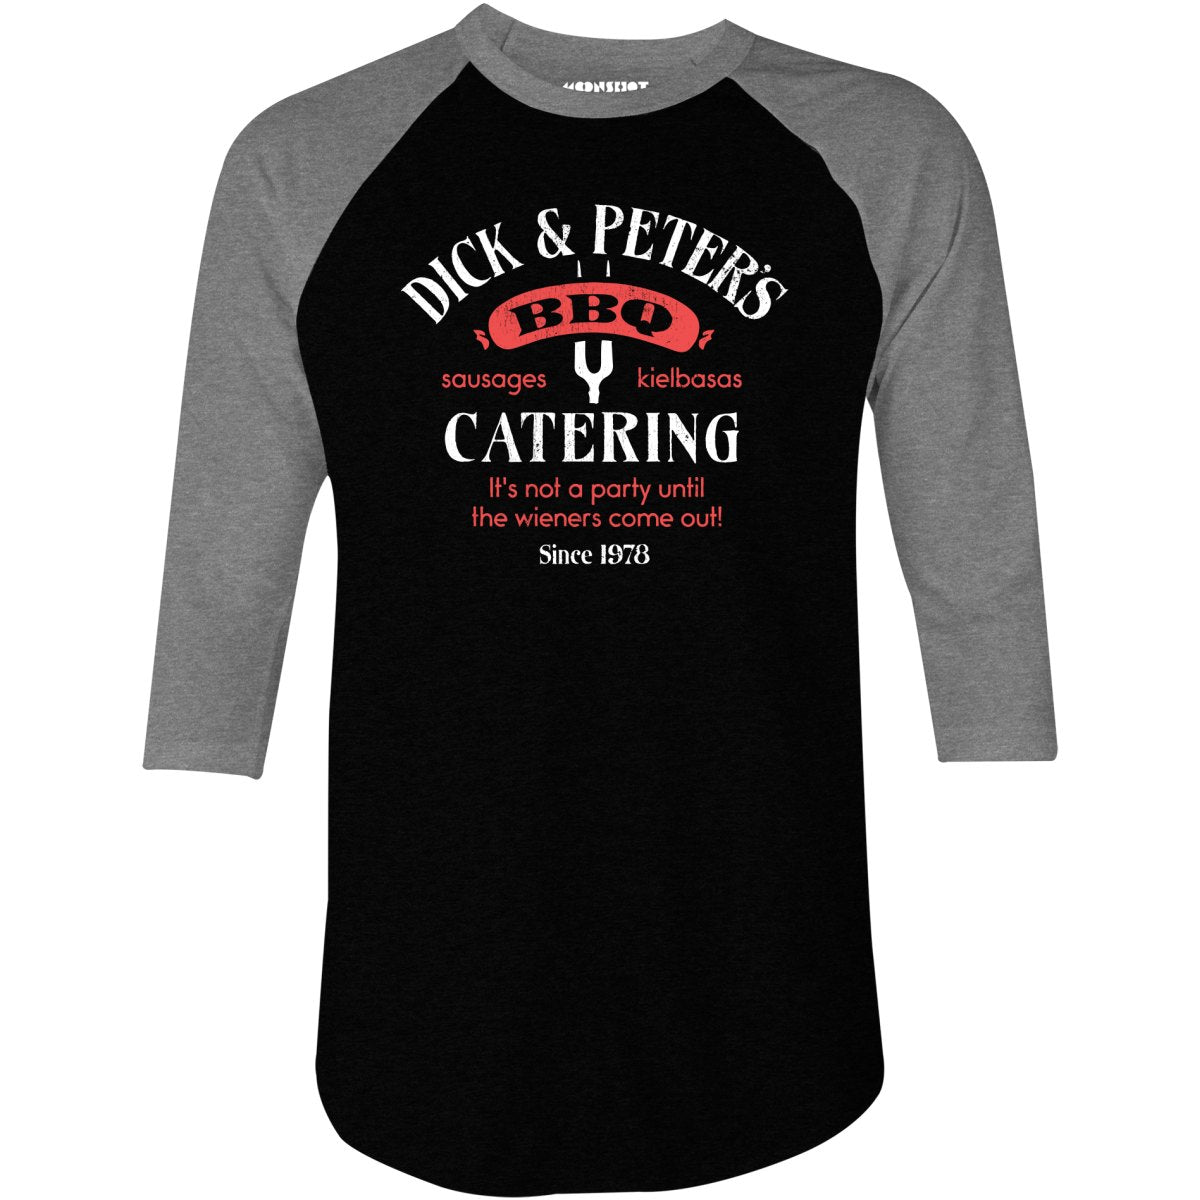 Dick & Peter's BBQ Catering - 3/4 Sleeve Raglan T-Shirt